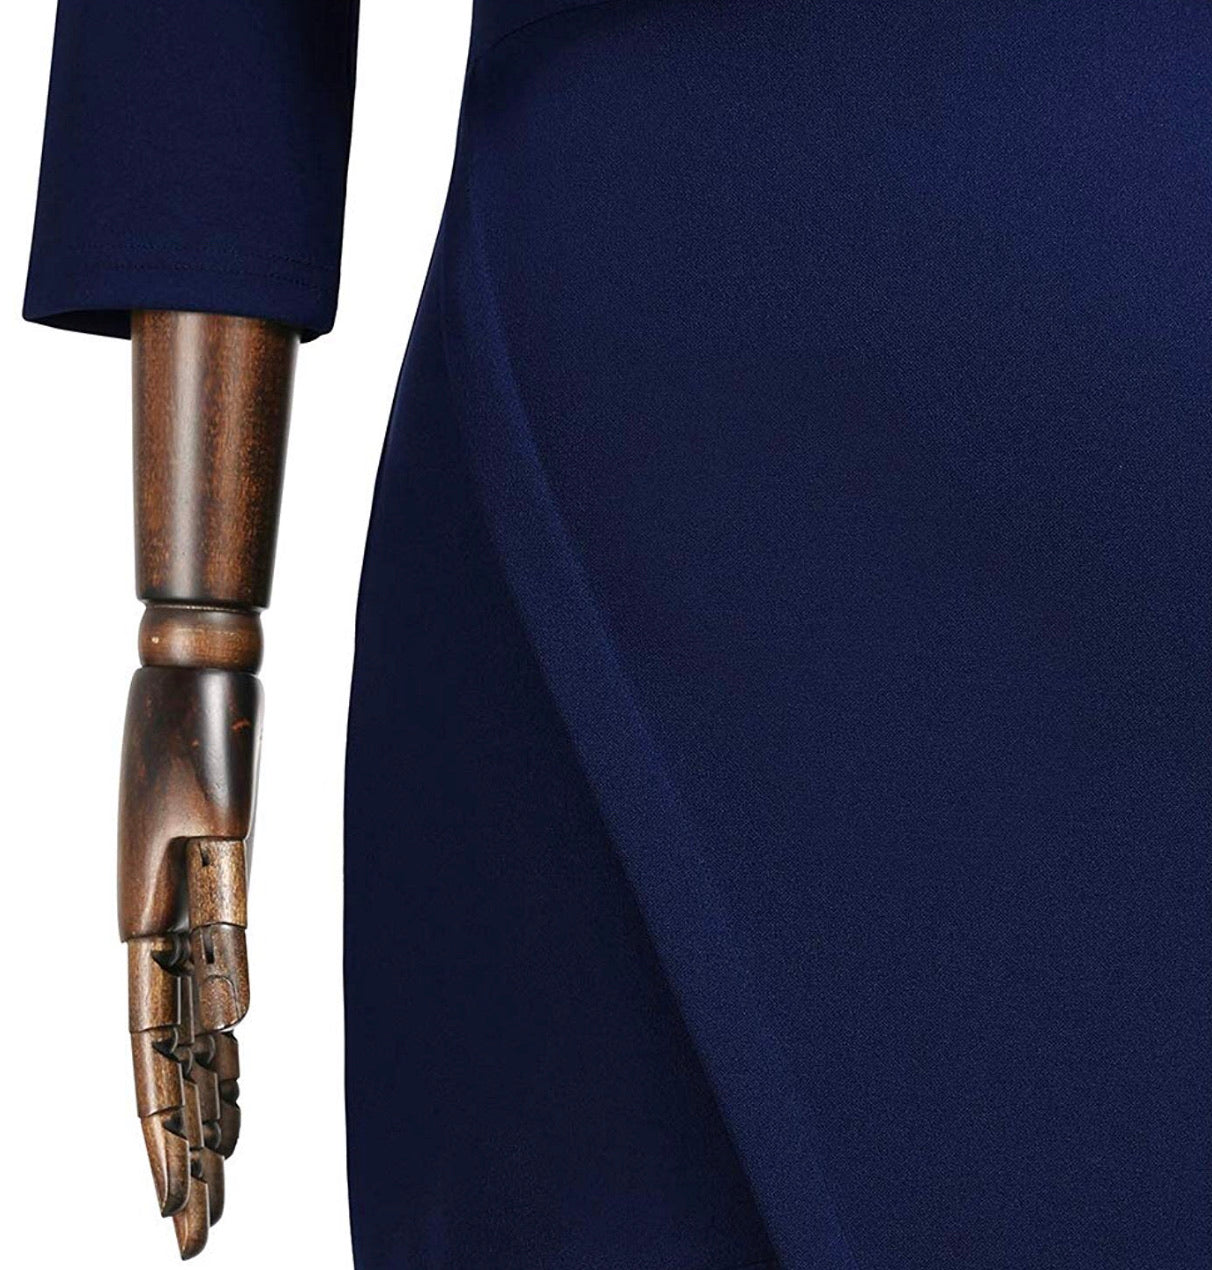 Vintage Inspired Pencil Dress, Sizes US 4 - 18 (Dark Blue)